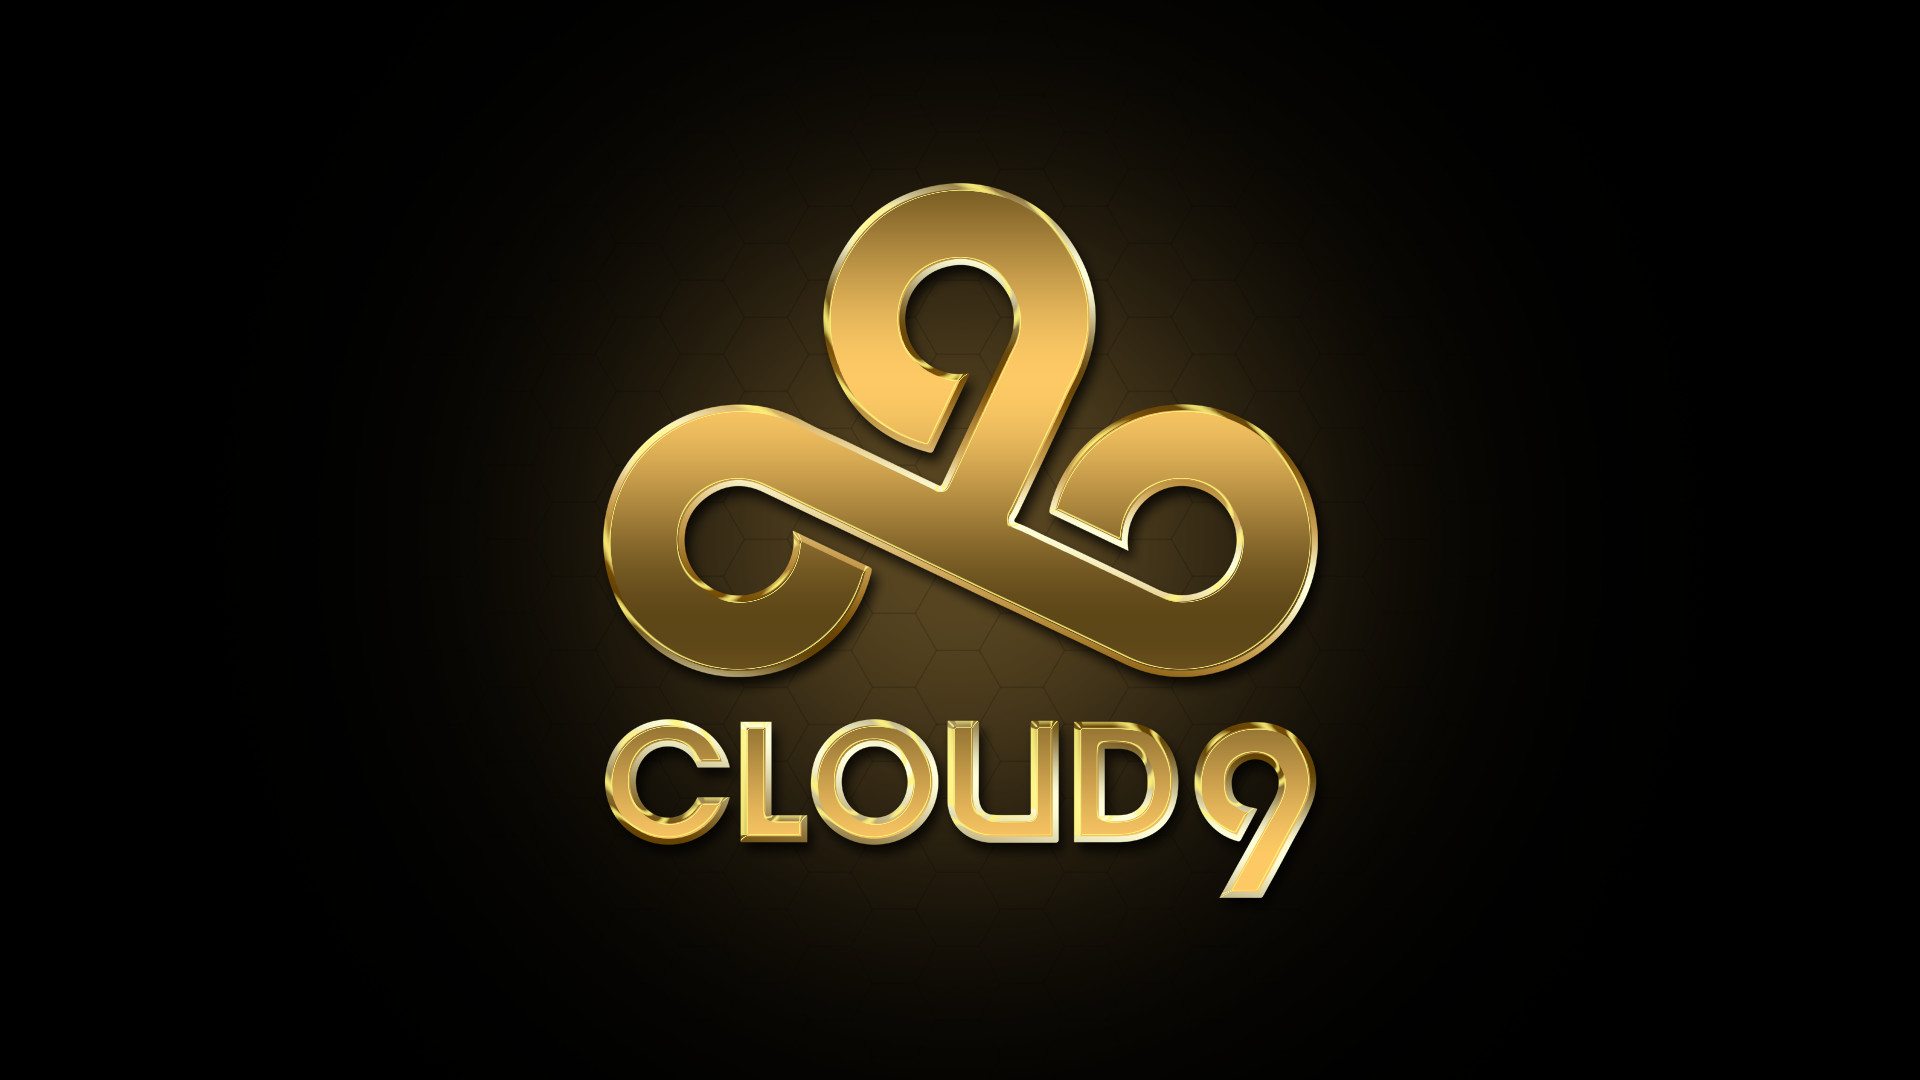 1920x1080 Cloud9 Gold